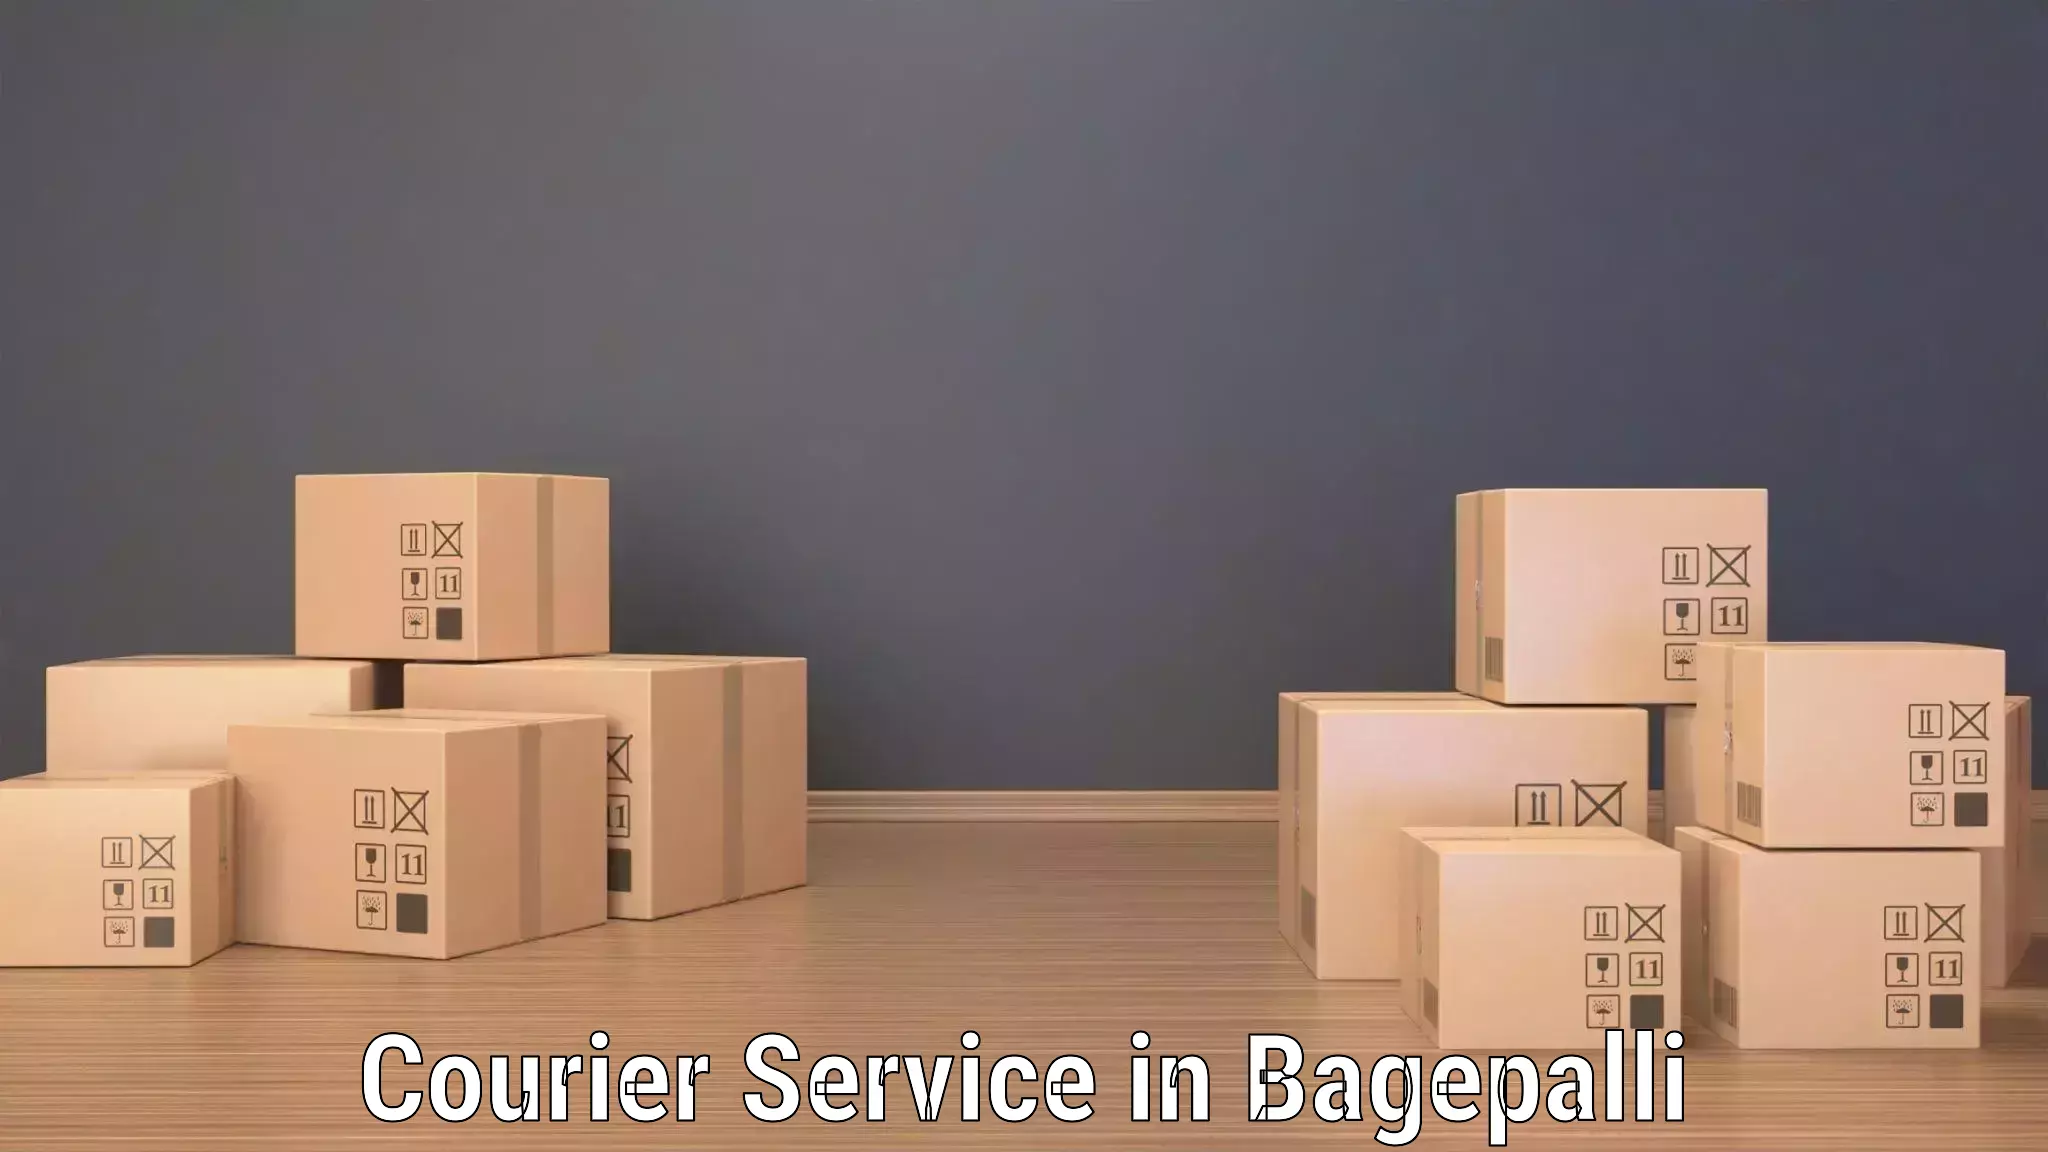 Express mail service in Bagepalli